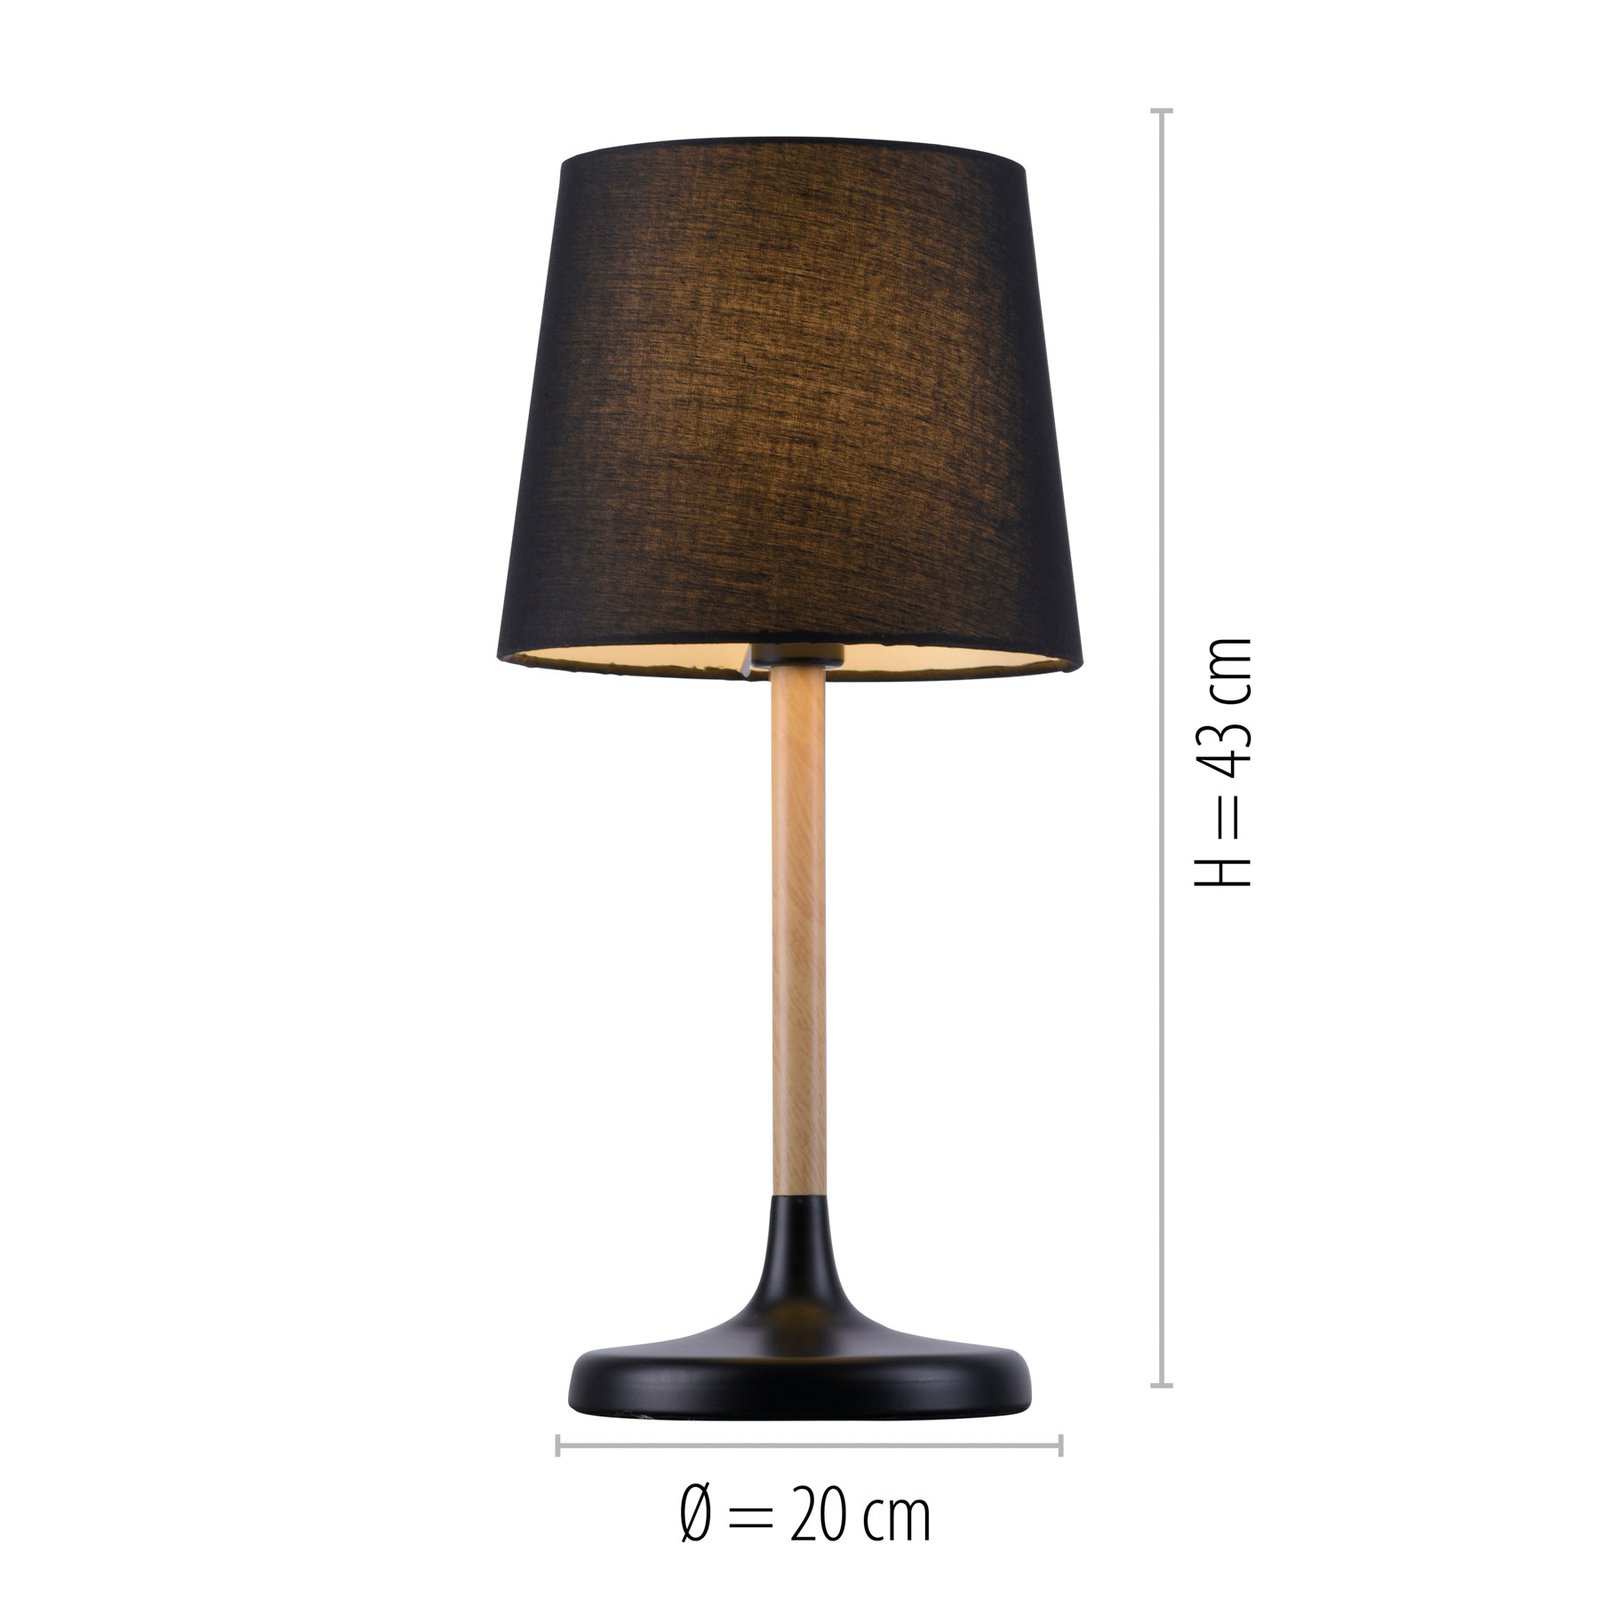 Nima table lamp with black fabric shade